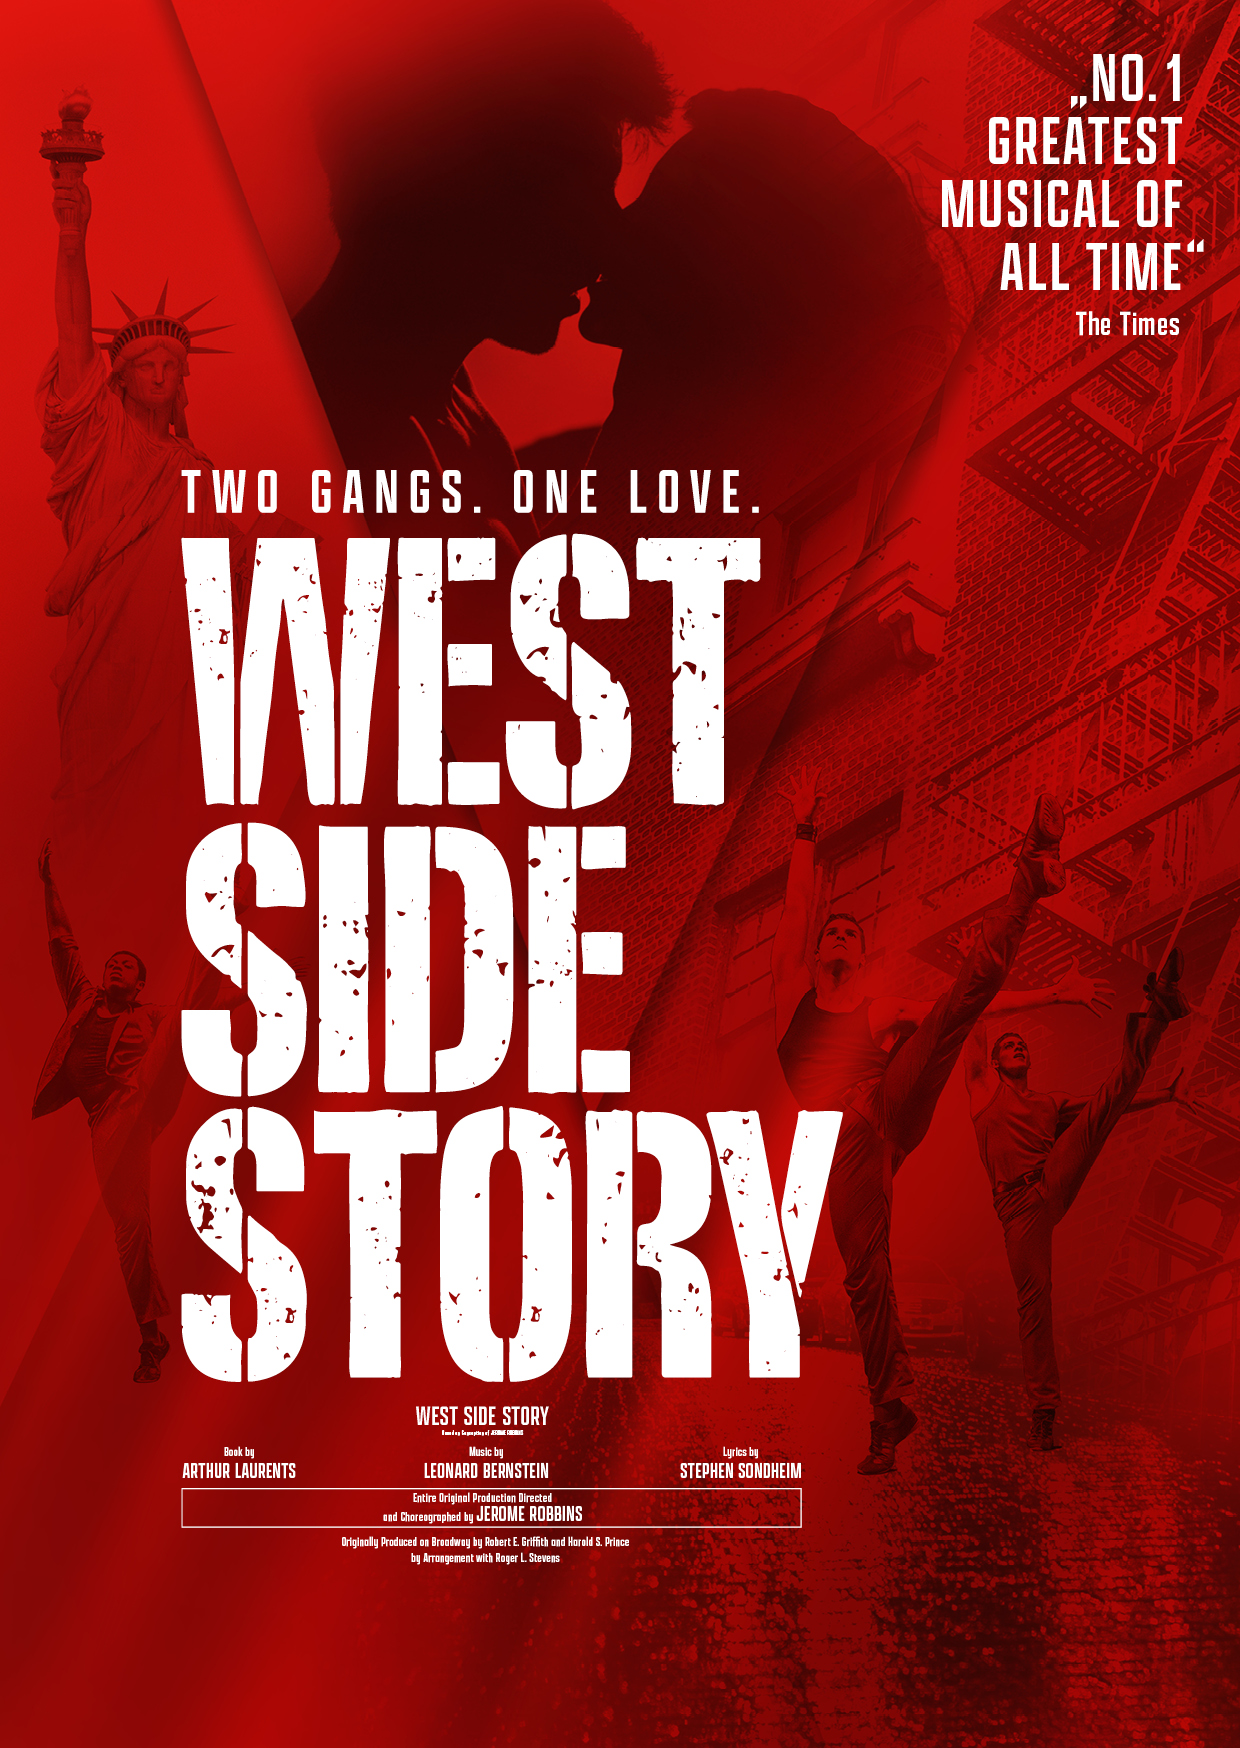 Seeking Musicians- West Side Story - International Tour 